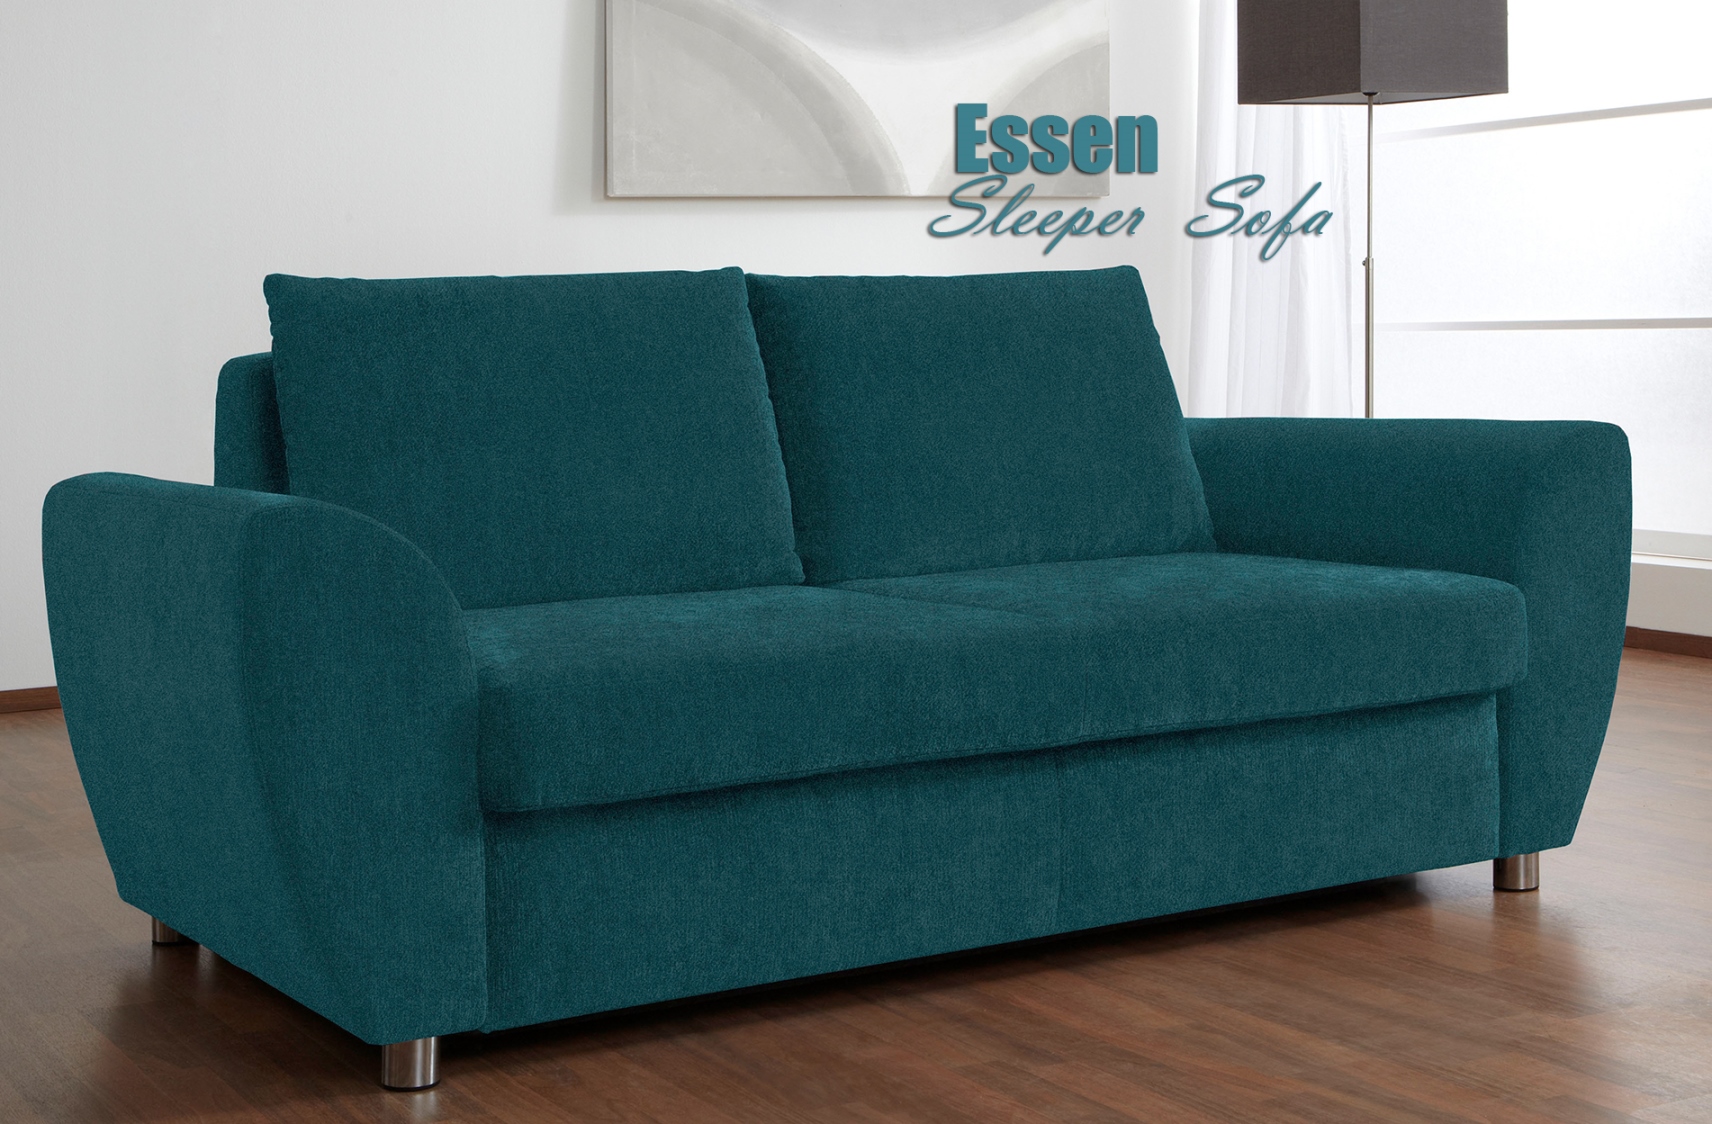 Essen Sleeper Sofa - photo №43